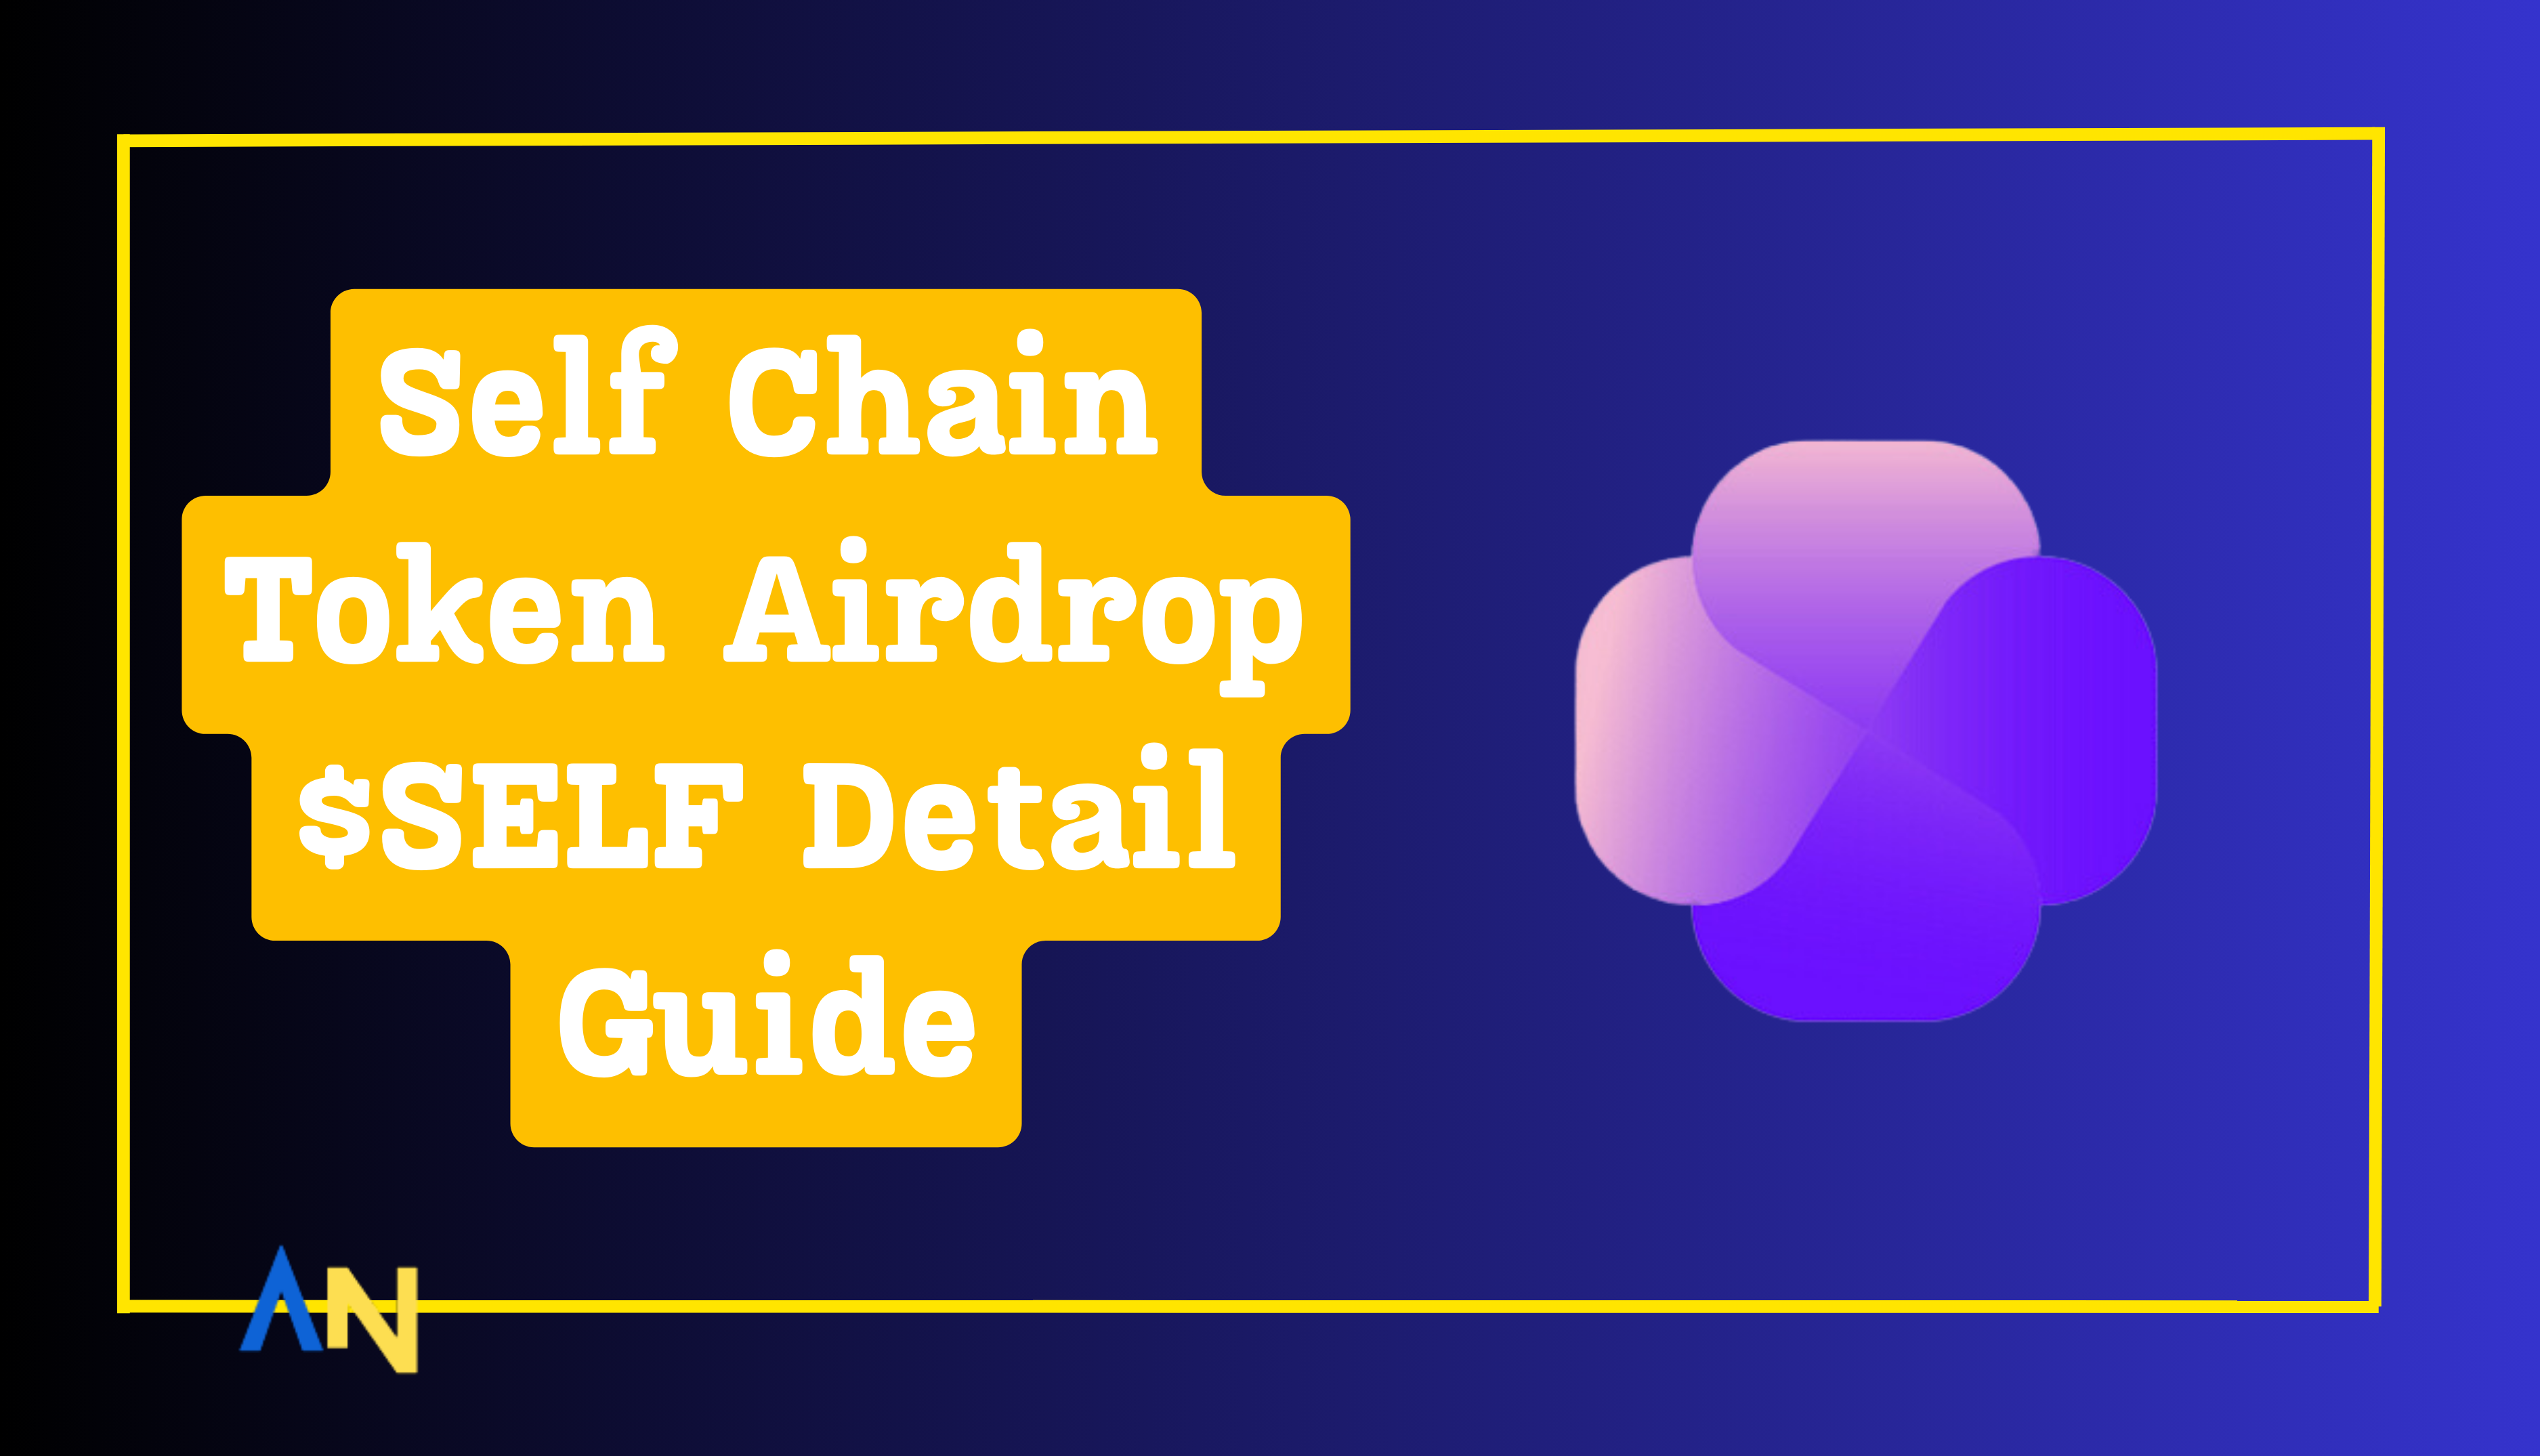 Self Chain Token Airdrop $SELF Detail Guide